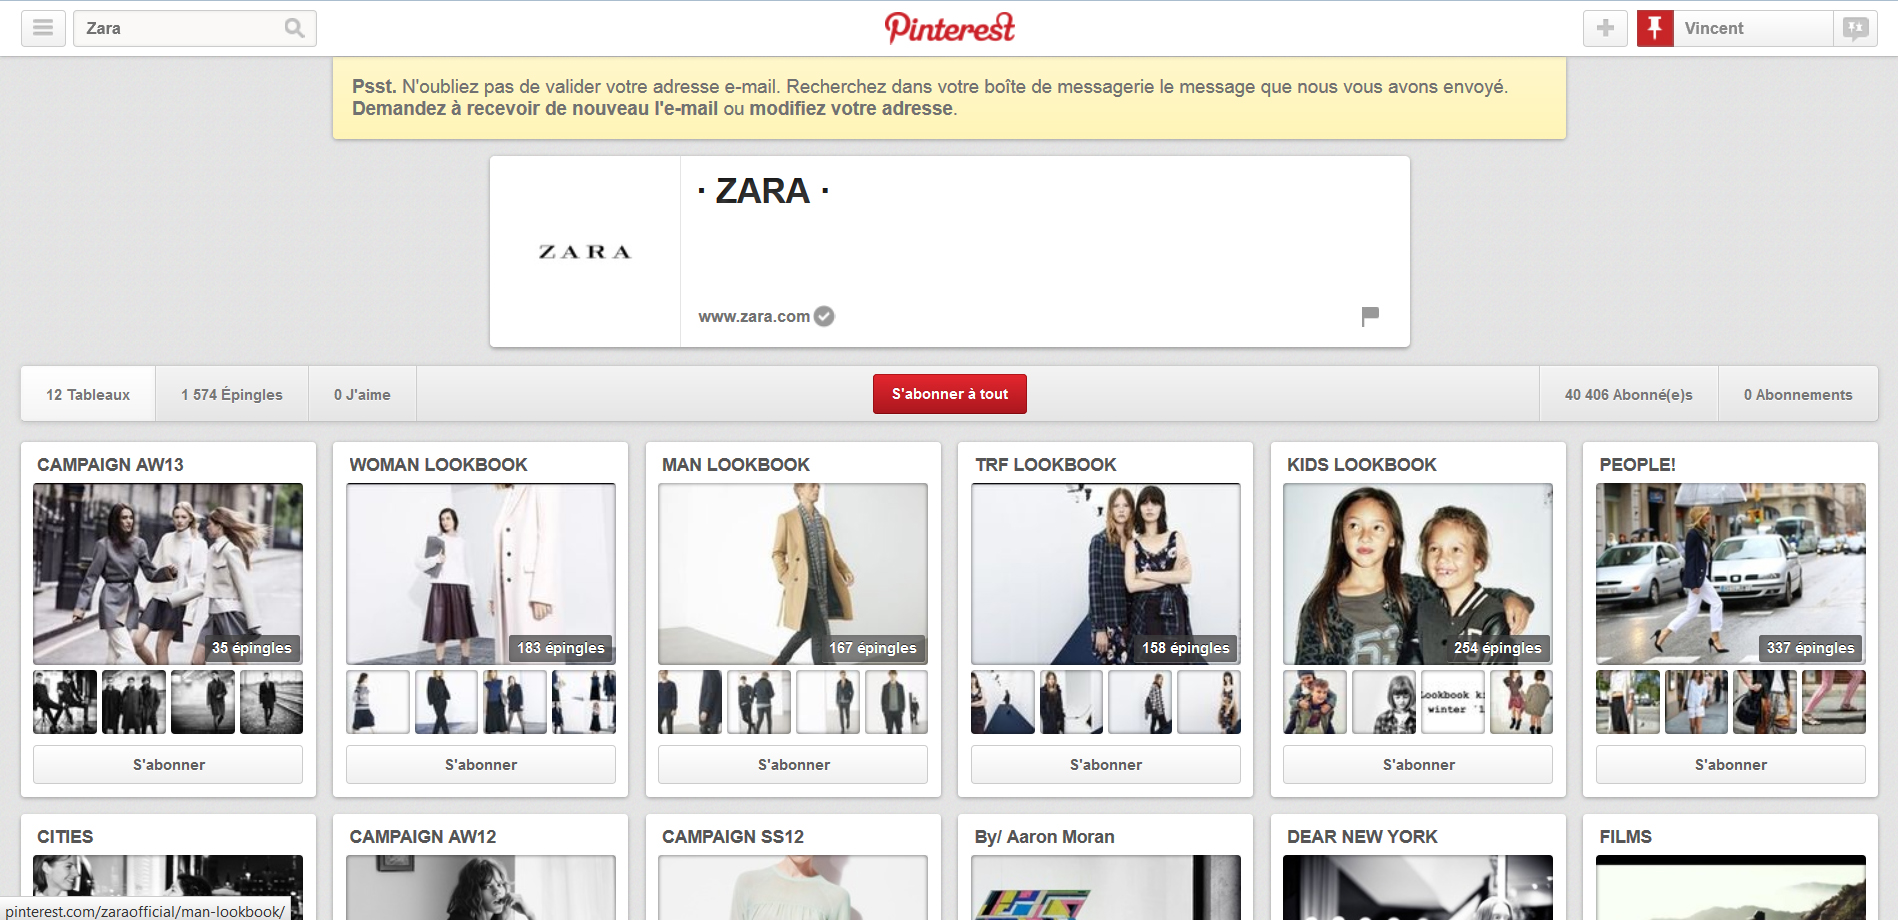 Pinterest Zara